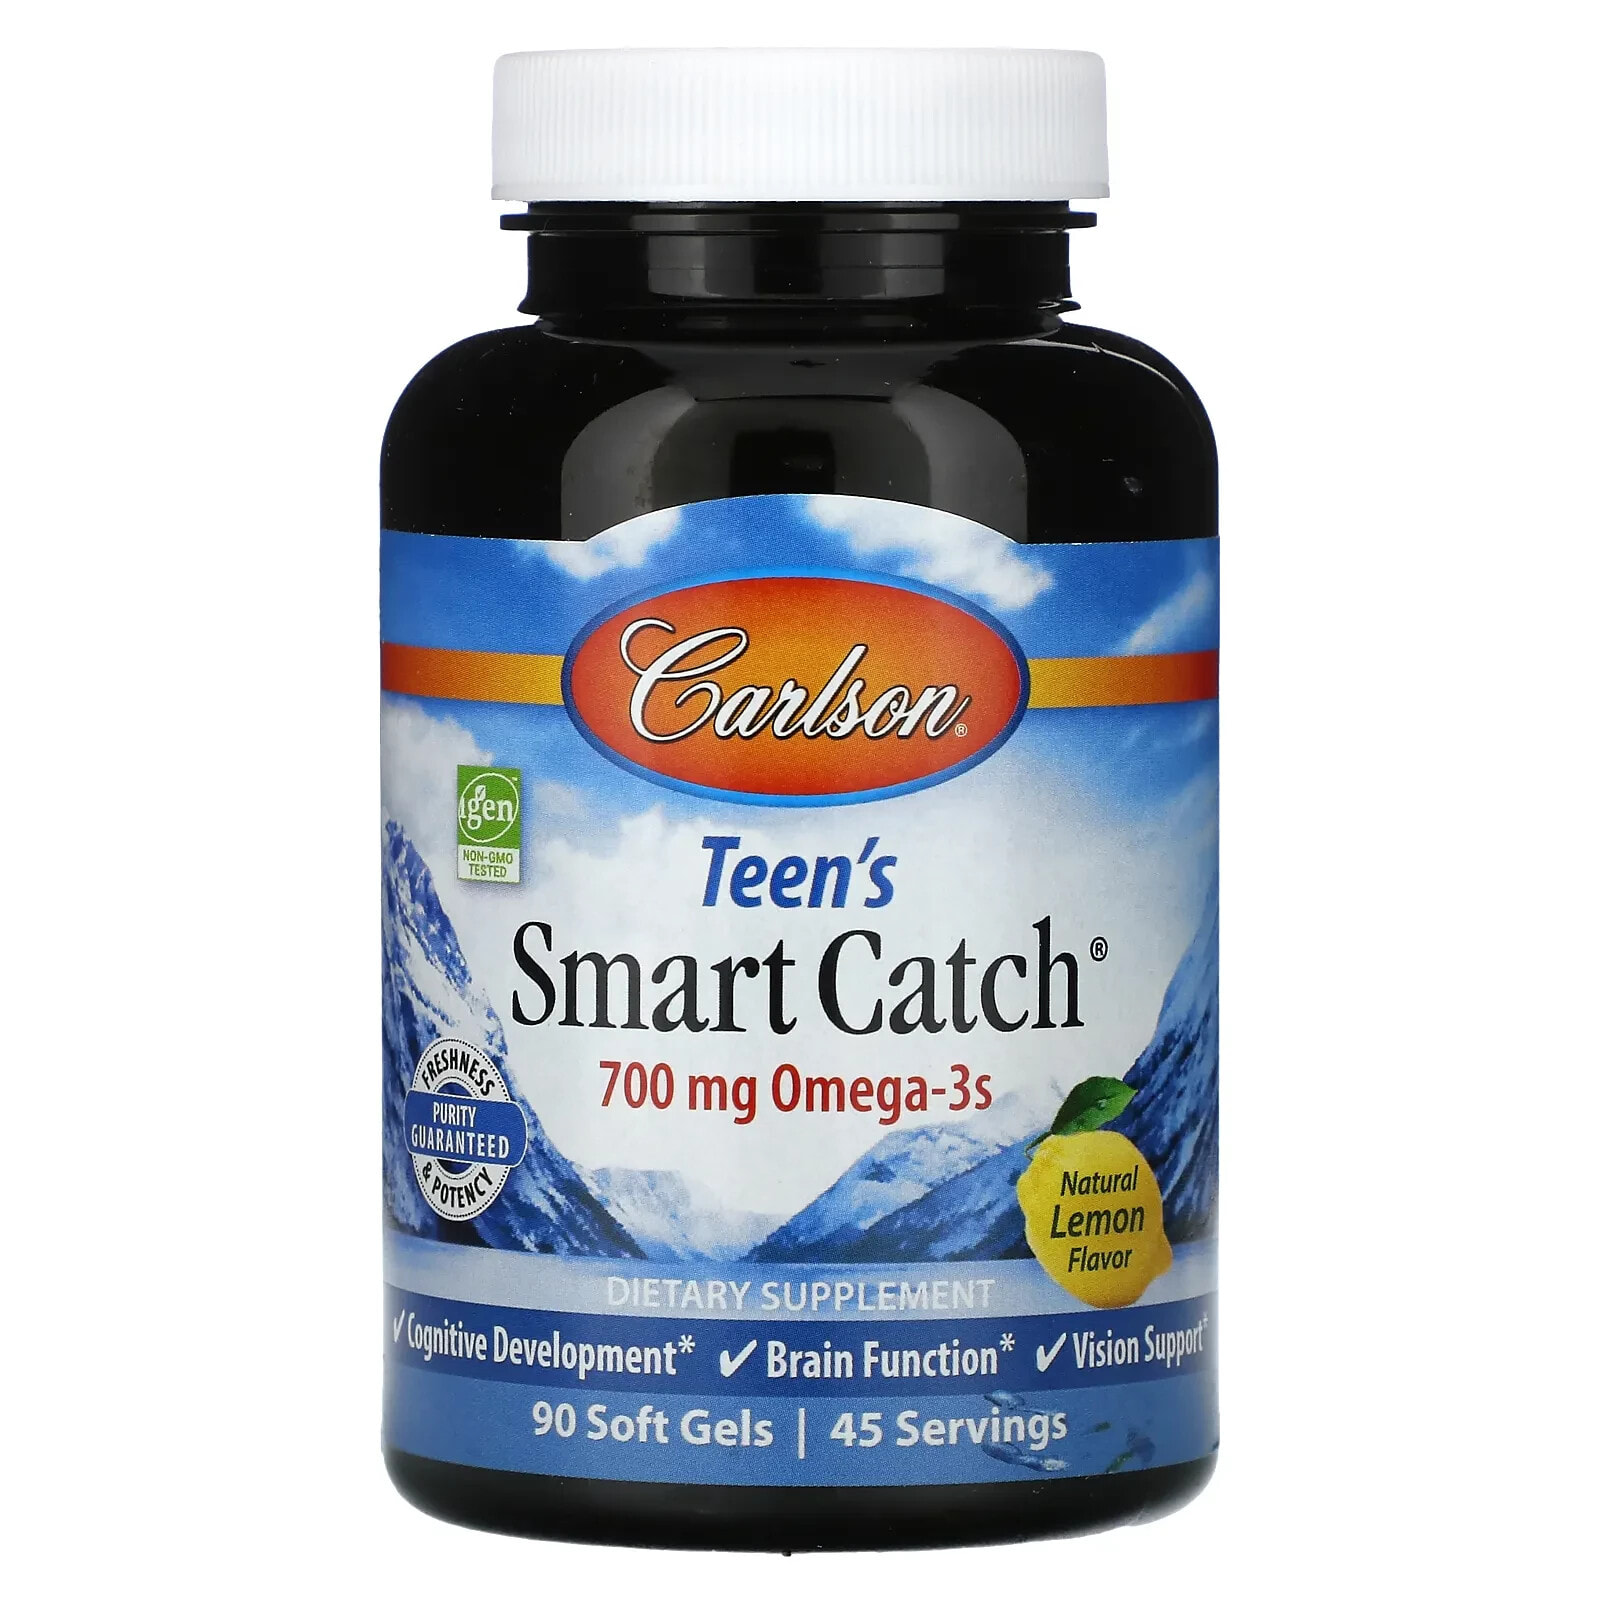 Teen's Smart Catch, Natural Lemon, 700 mg, 90 Soft Gels (350 mg per Soft Gel)